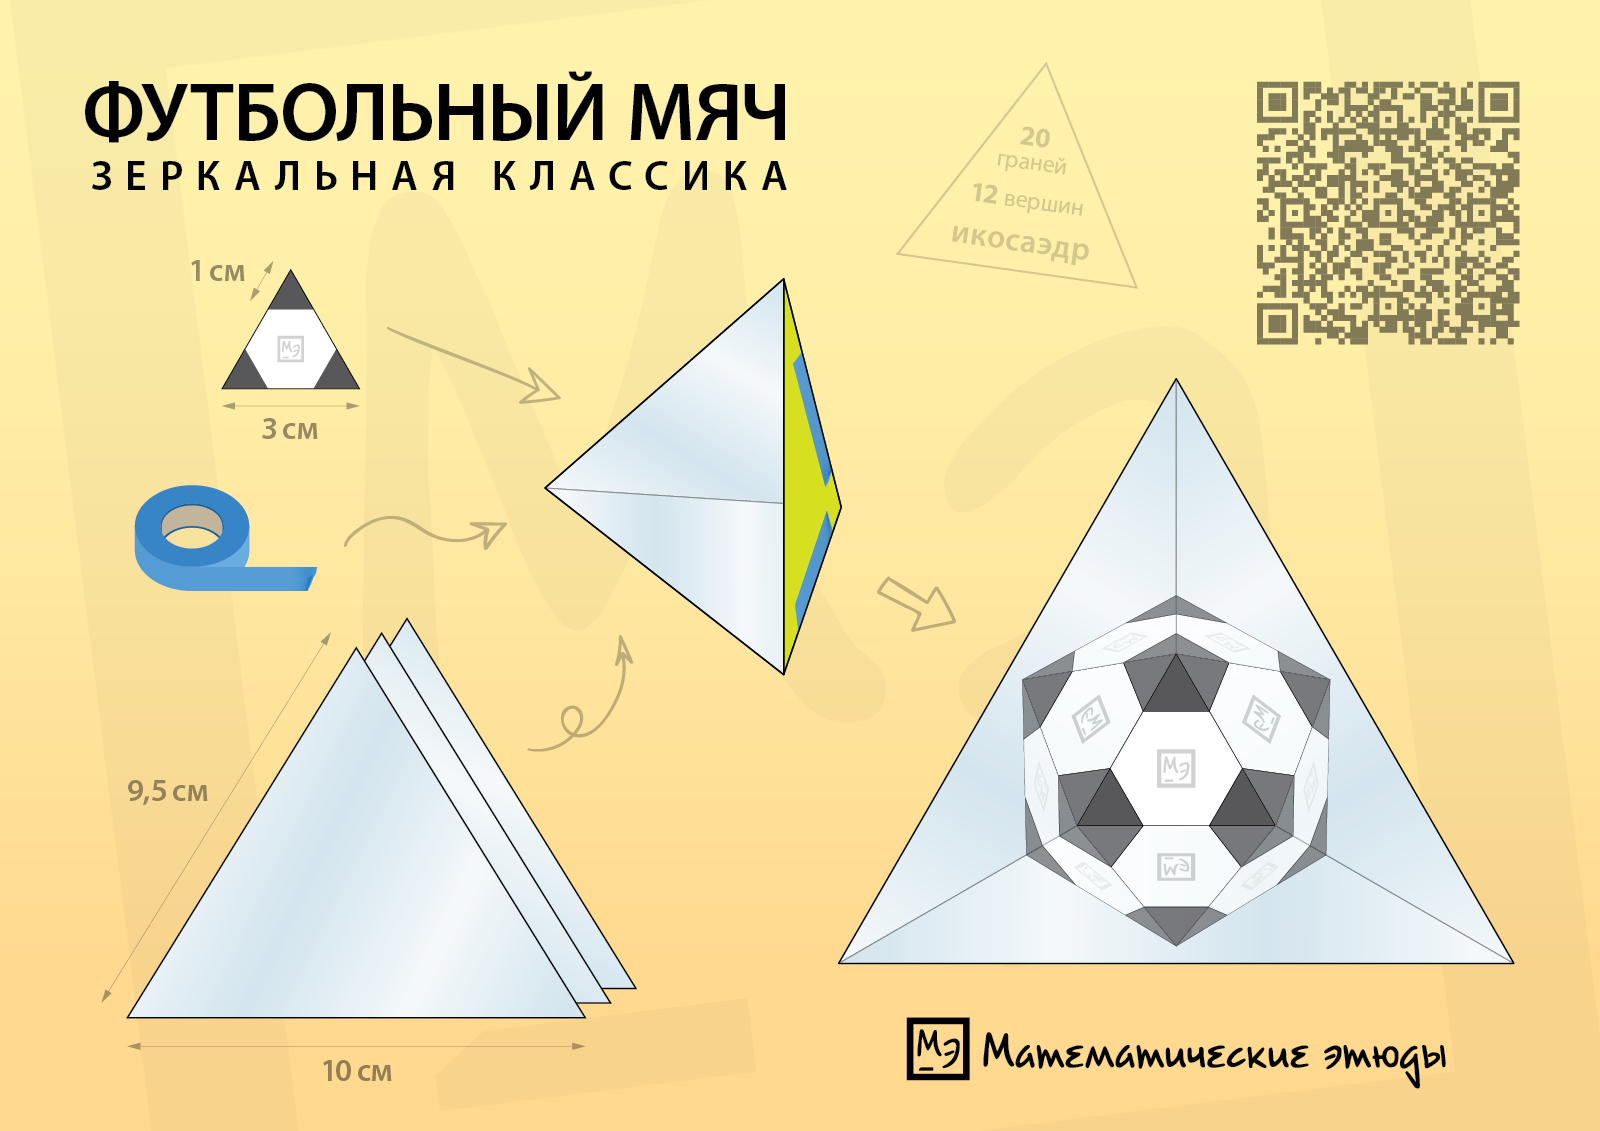 Soccer ball: mirror classic - icosahedron, Mathematics, Ball, Football, My